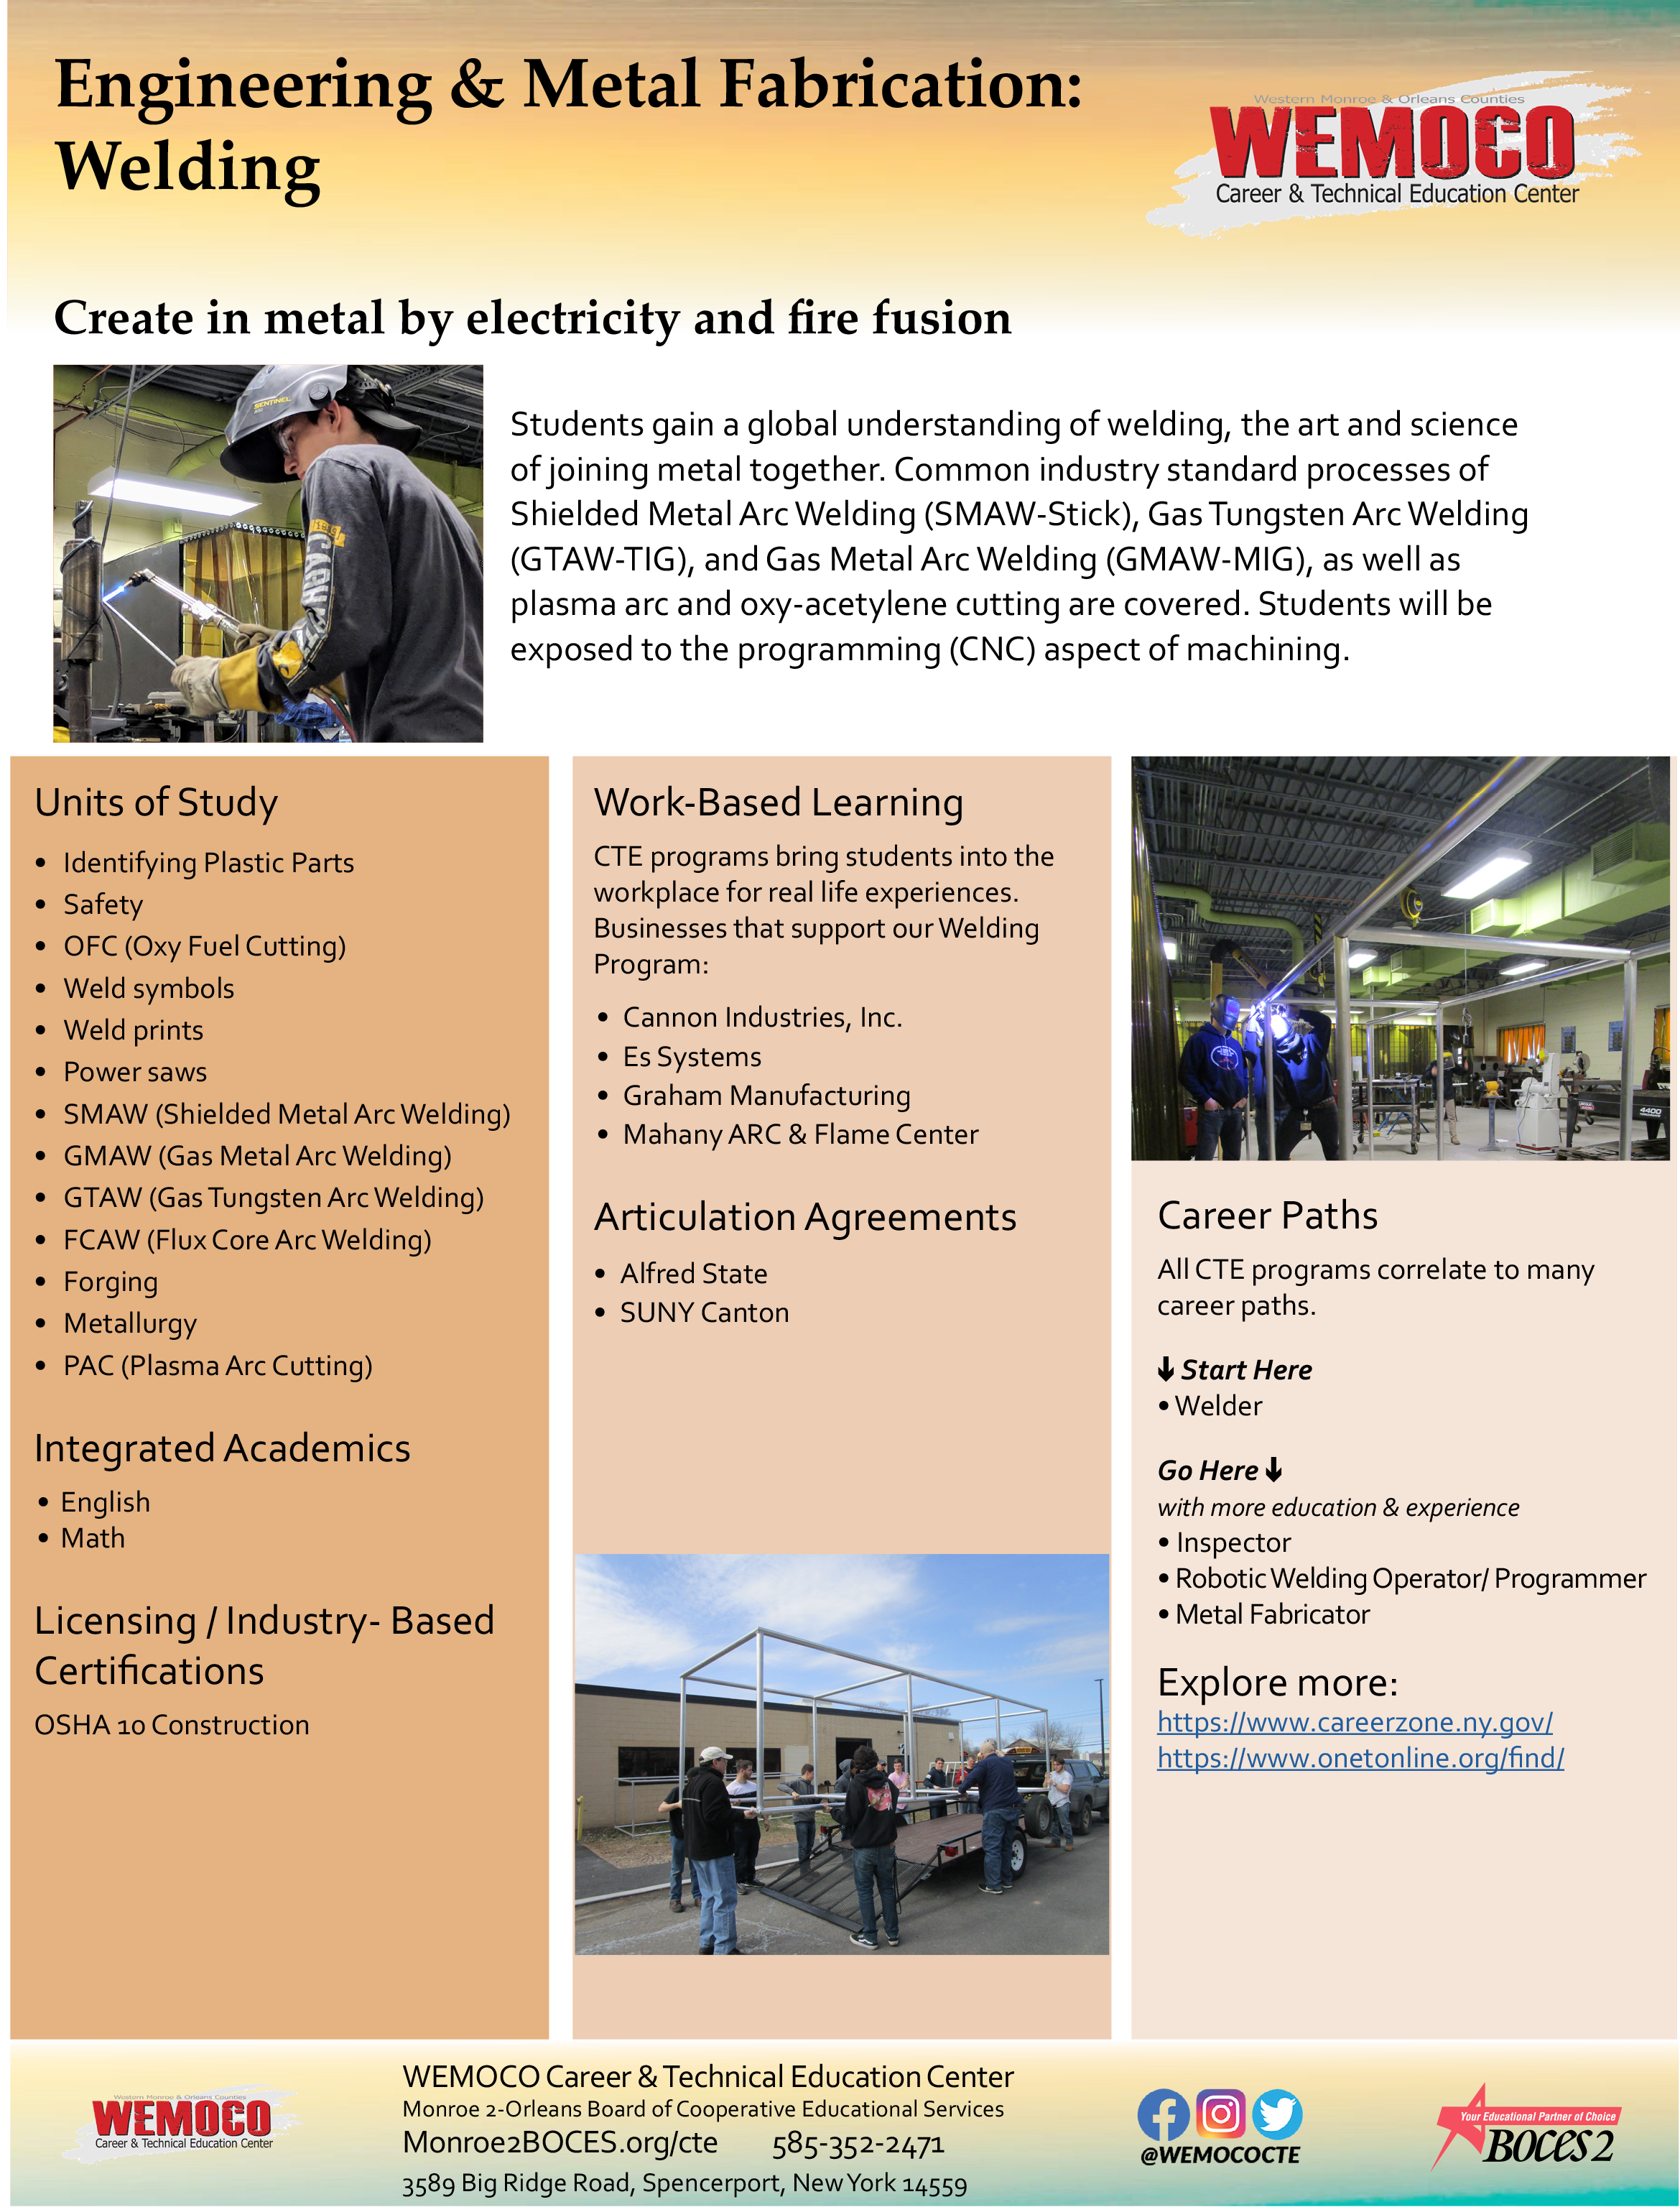 EMF Welding Program Information